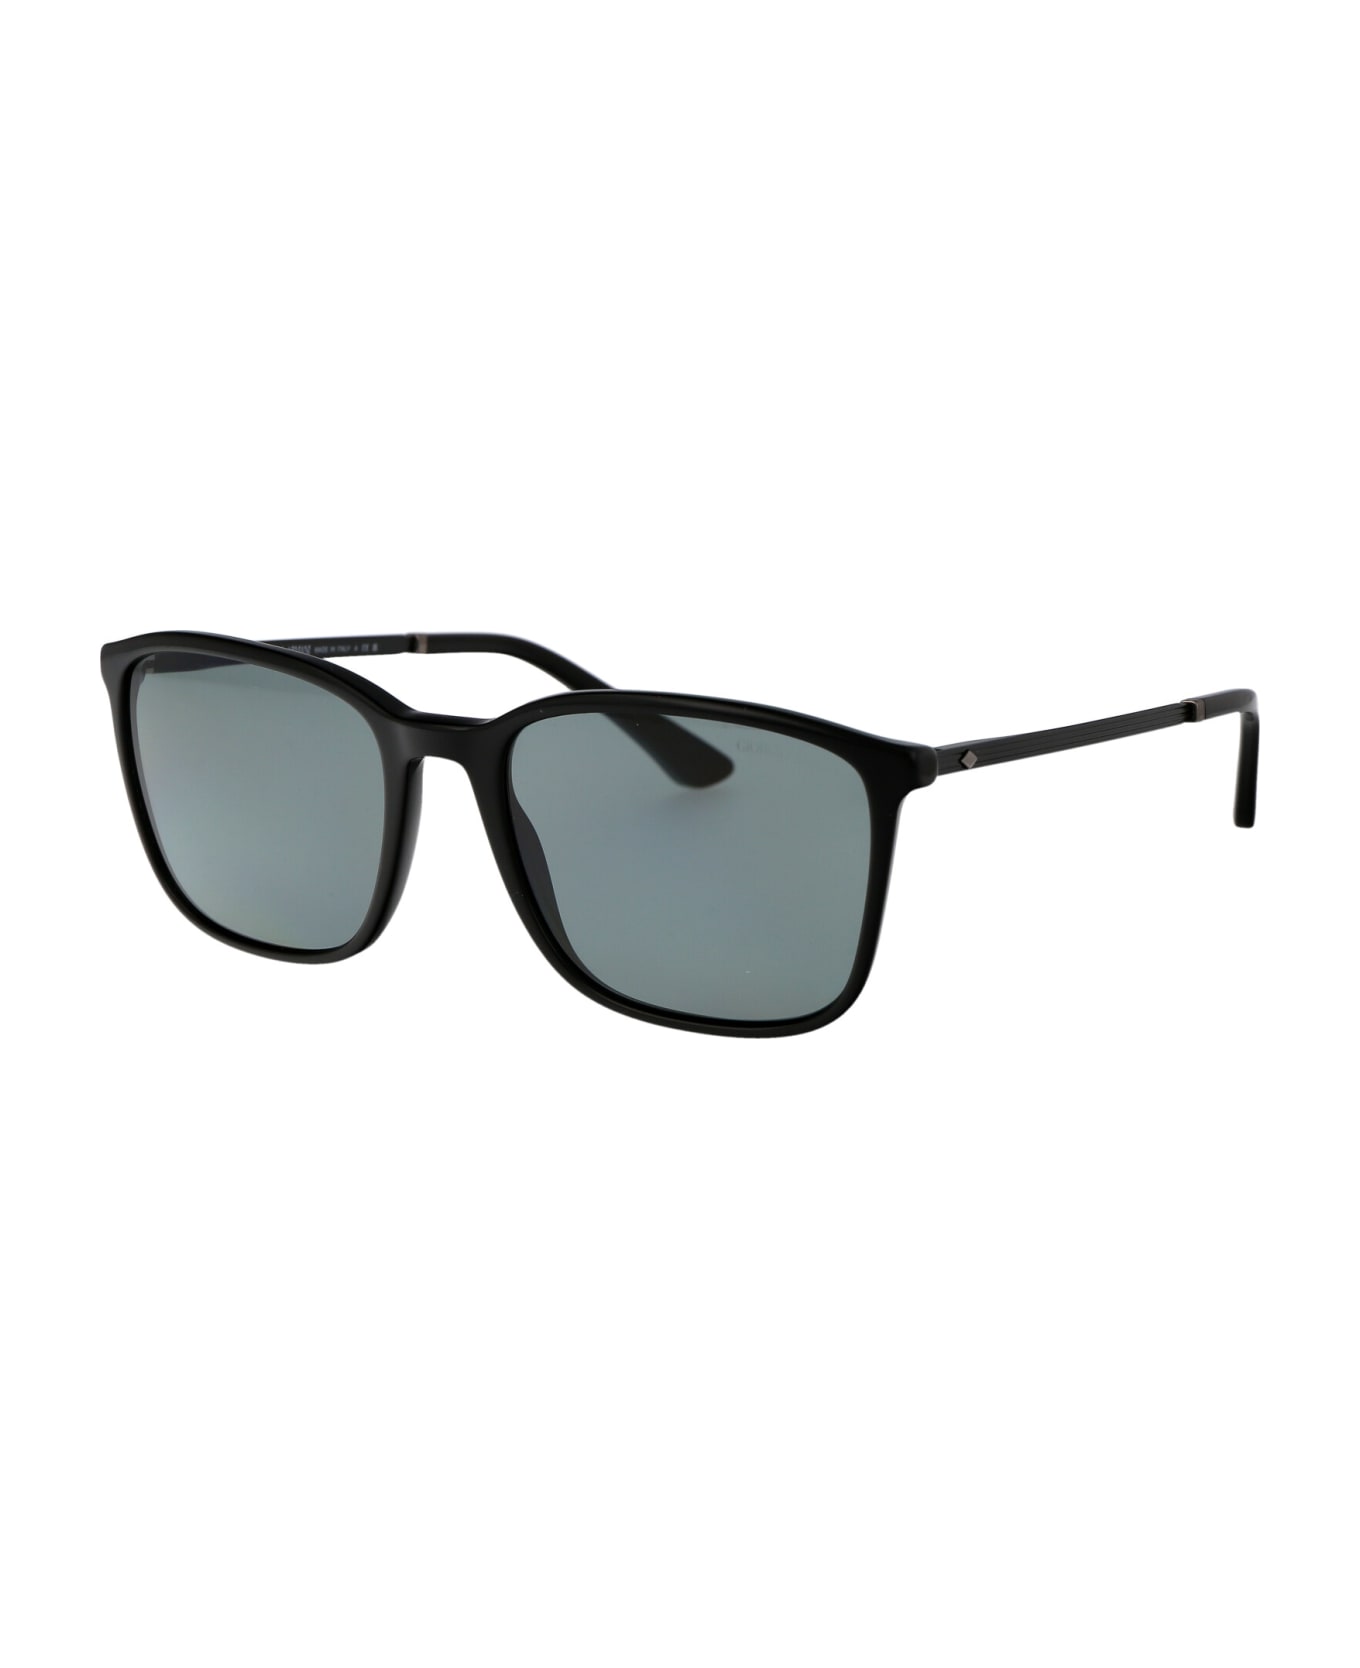 Giorgio Armani 0ar8197 Sunglasses - 5001/1 Black